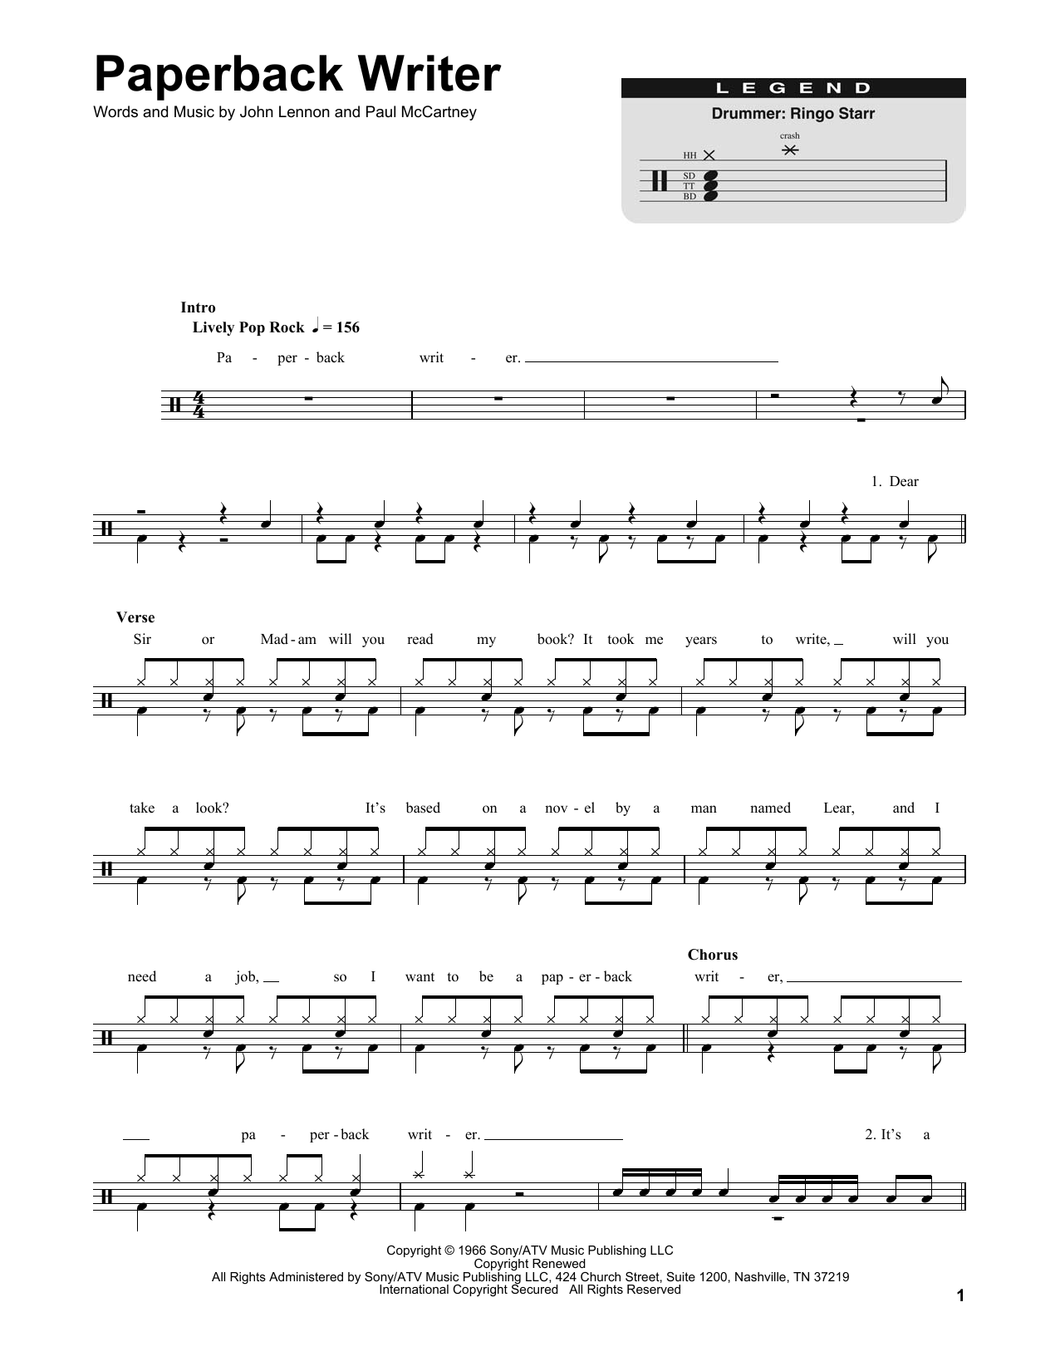 Paperback Writer - The Beatles - Full Drum Transcription / Drum Sheet Music - SheetMusicDirect DT